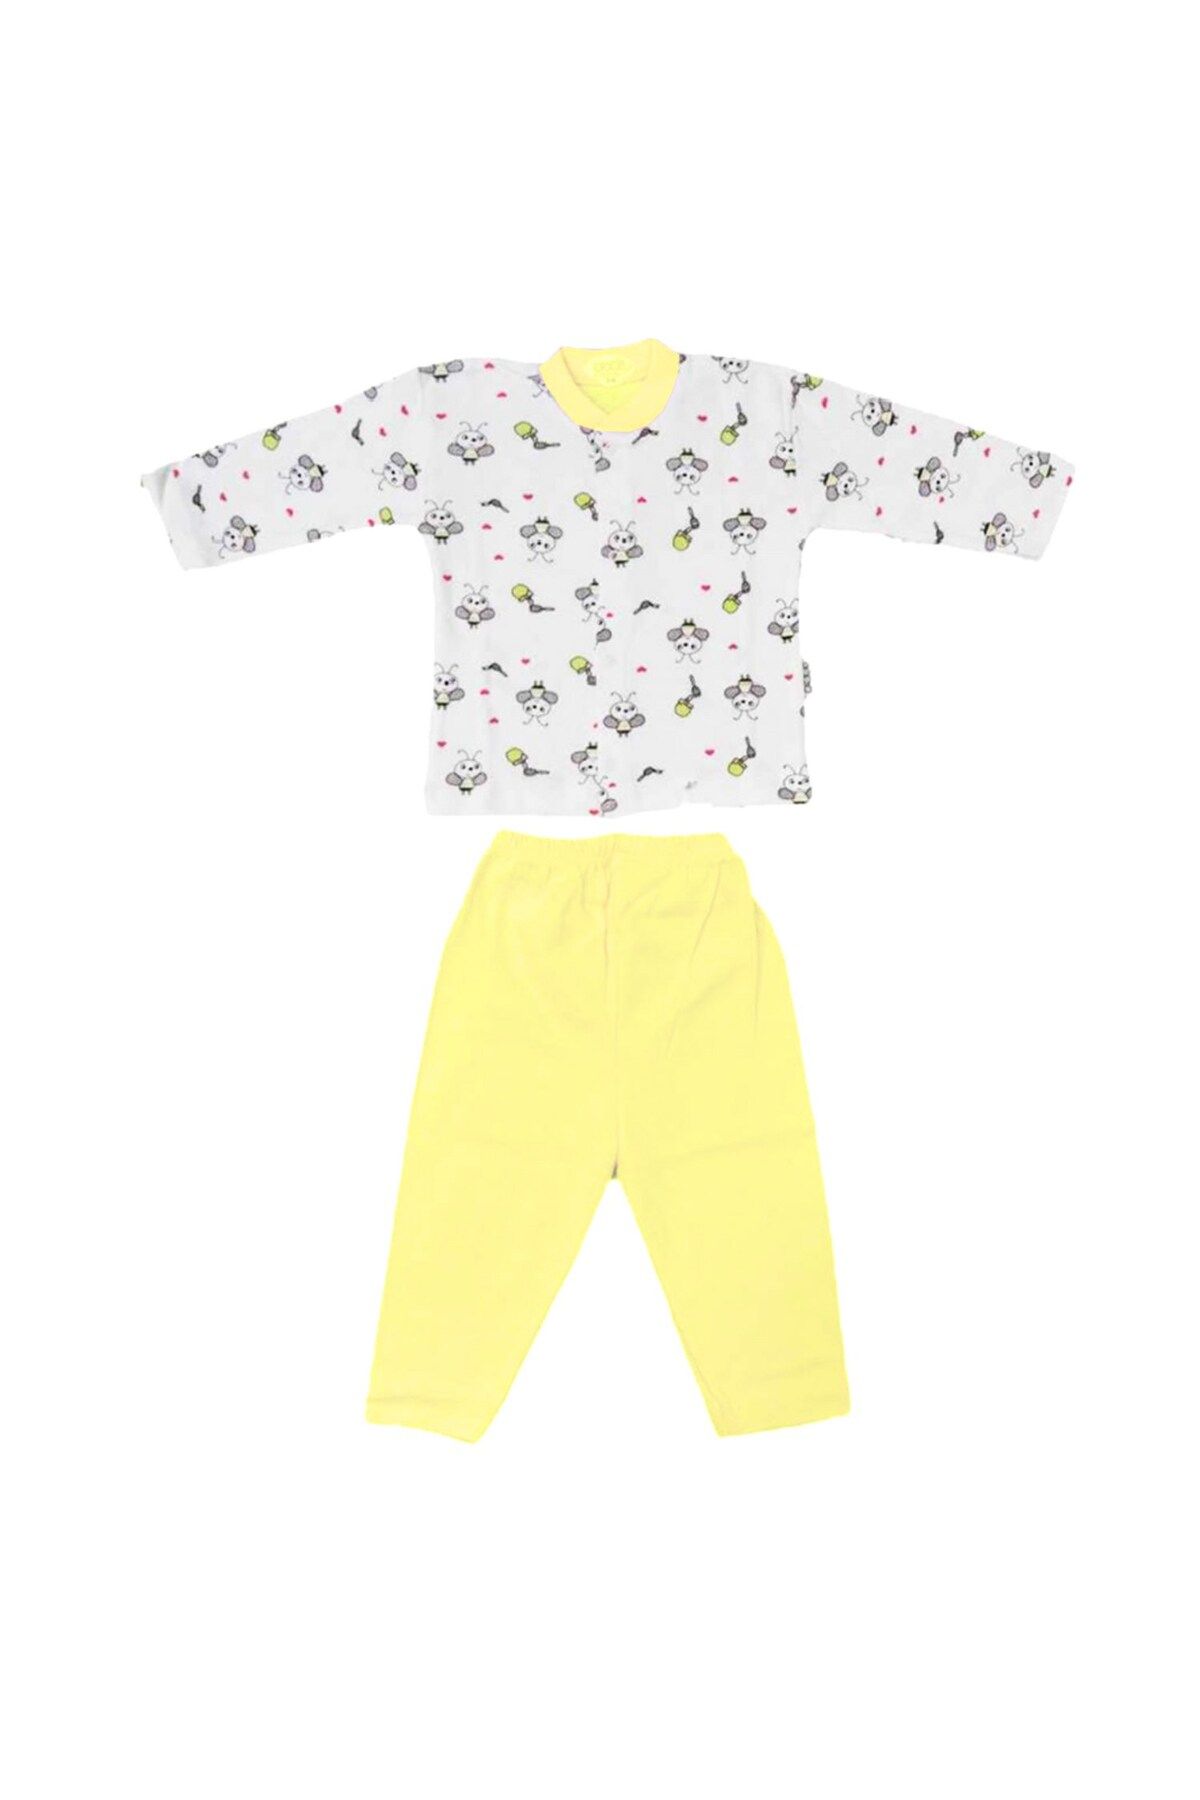 Sebi Bebe Bebek Pijama Takımı 2316